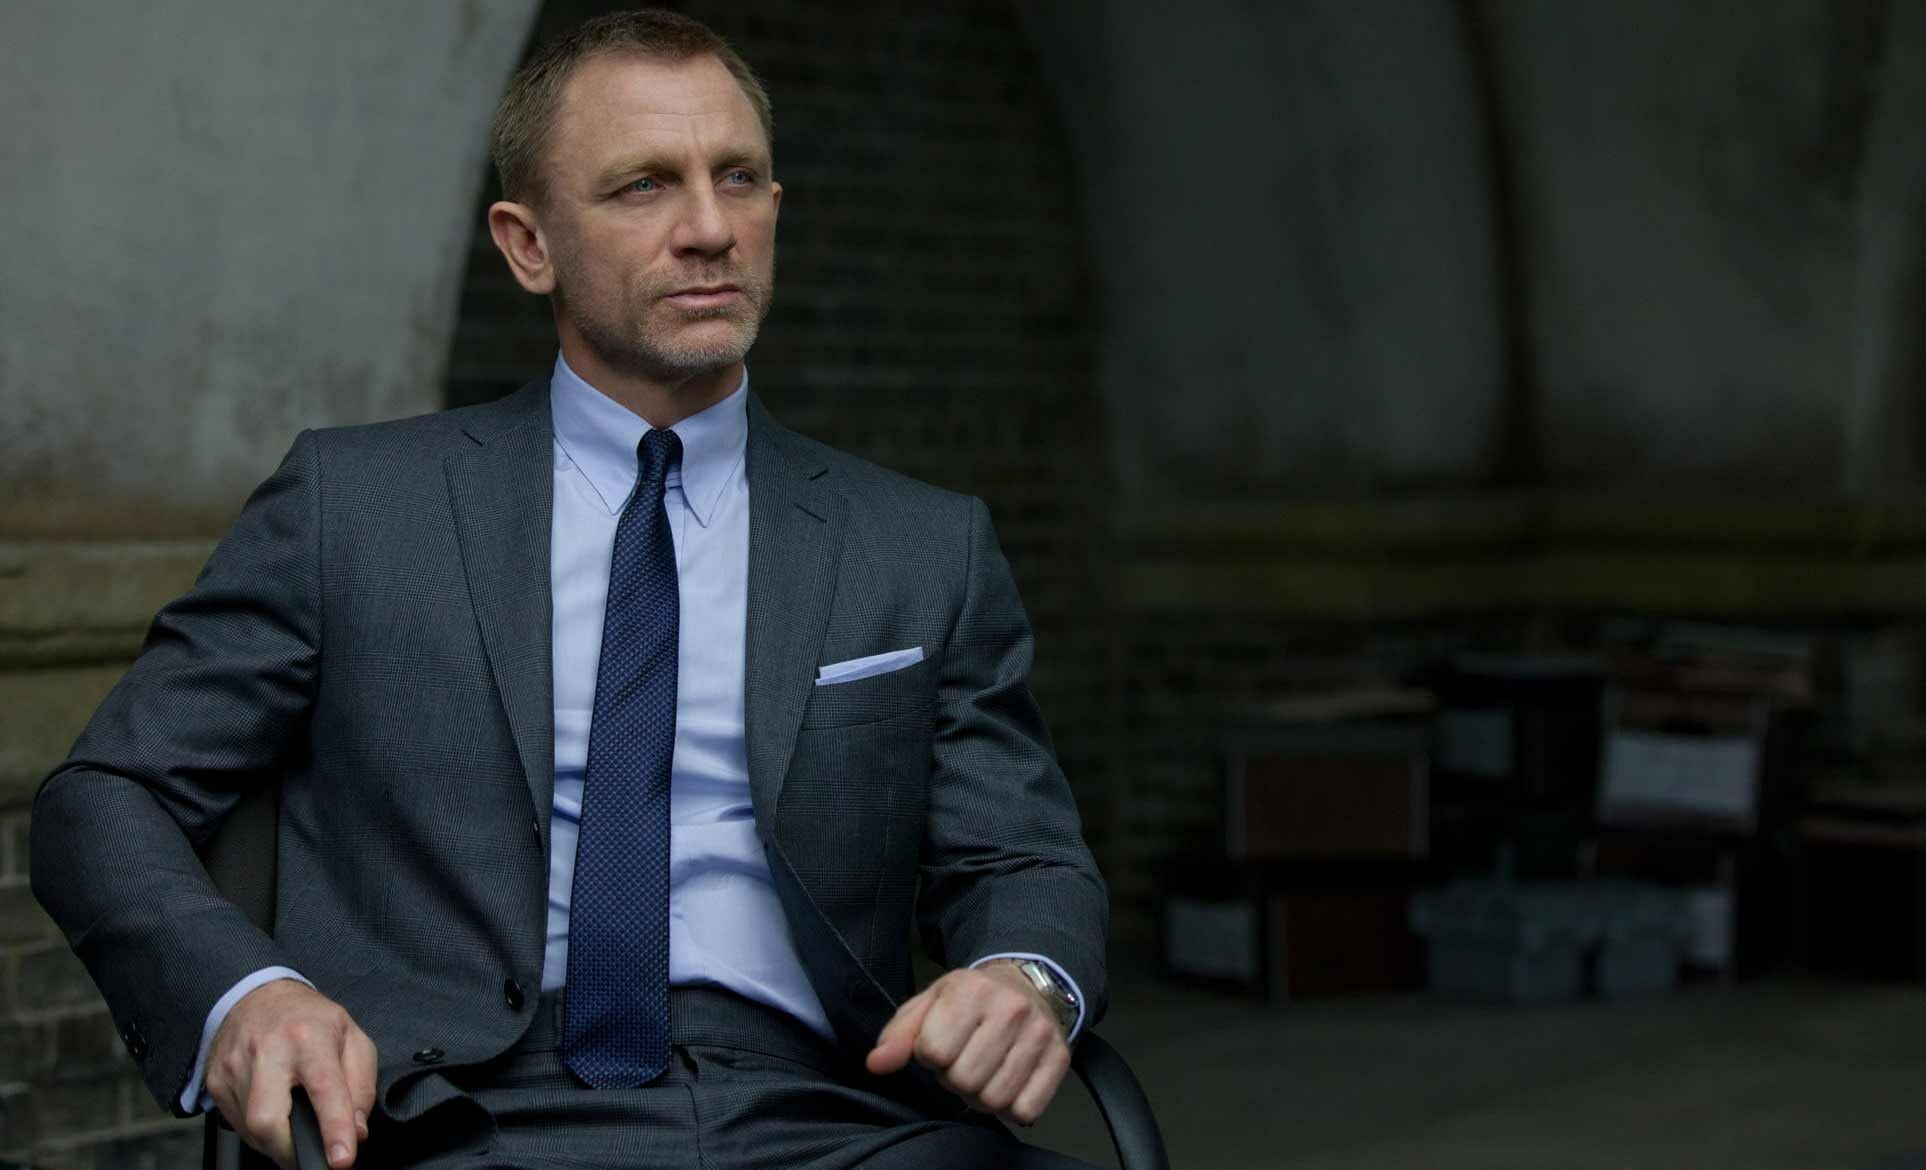 https://www.dmarge.com/wp-content/uploads/2017/01/James-Bond-Gray-and-Blue.jpeg